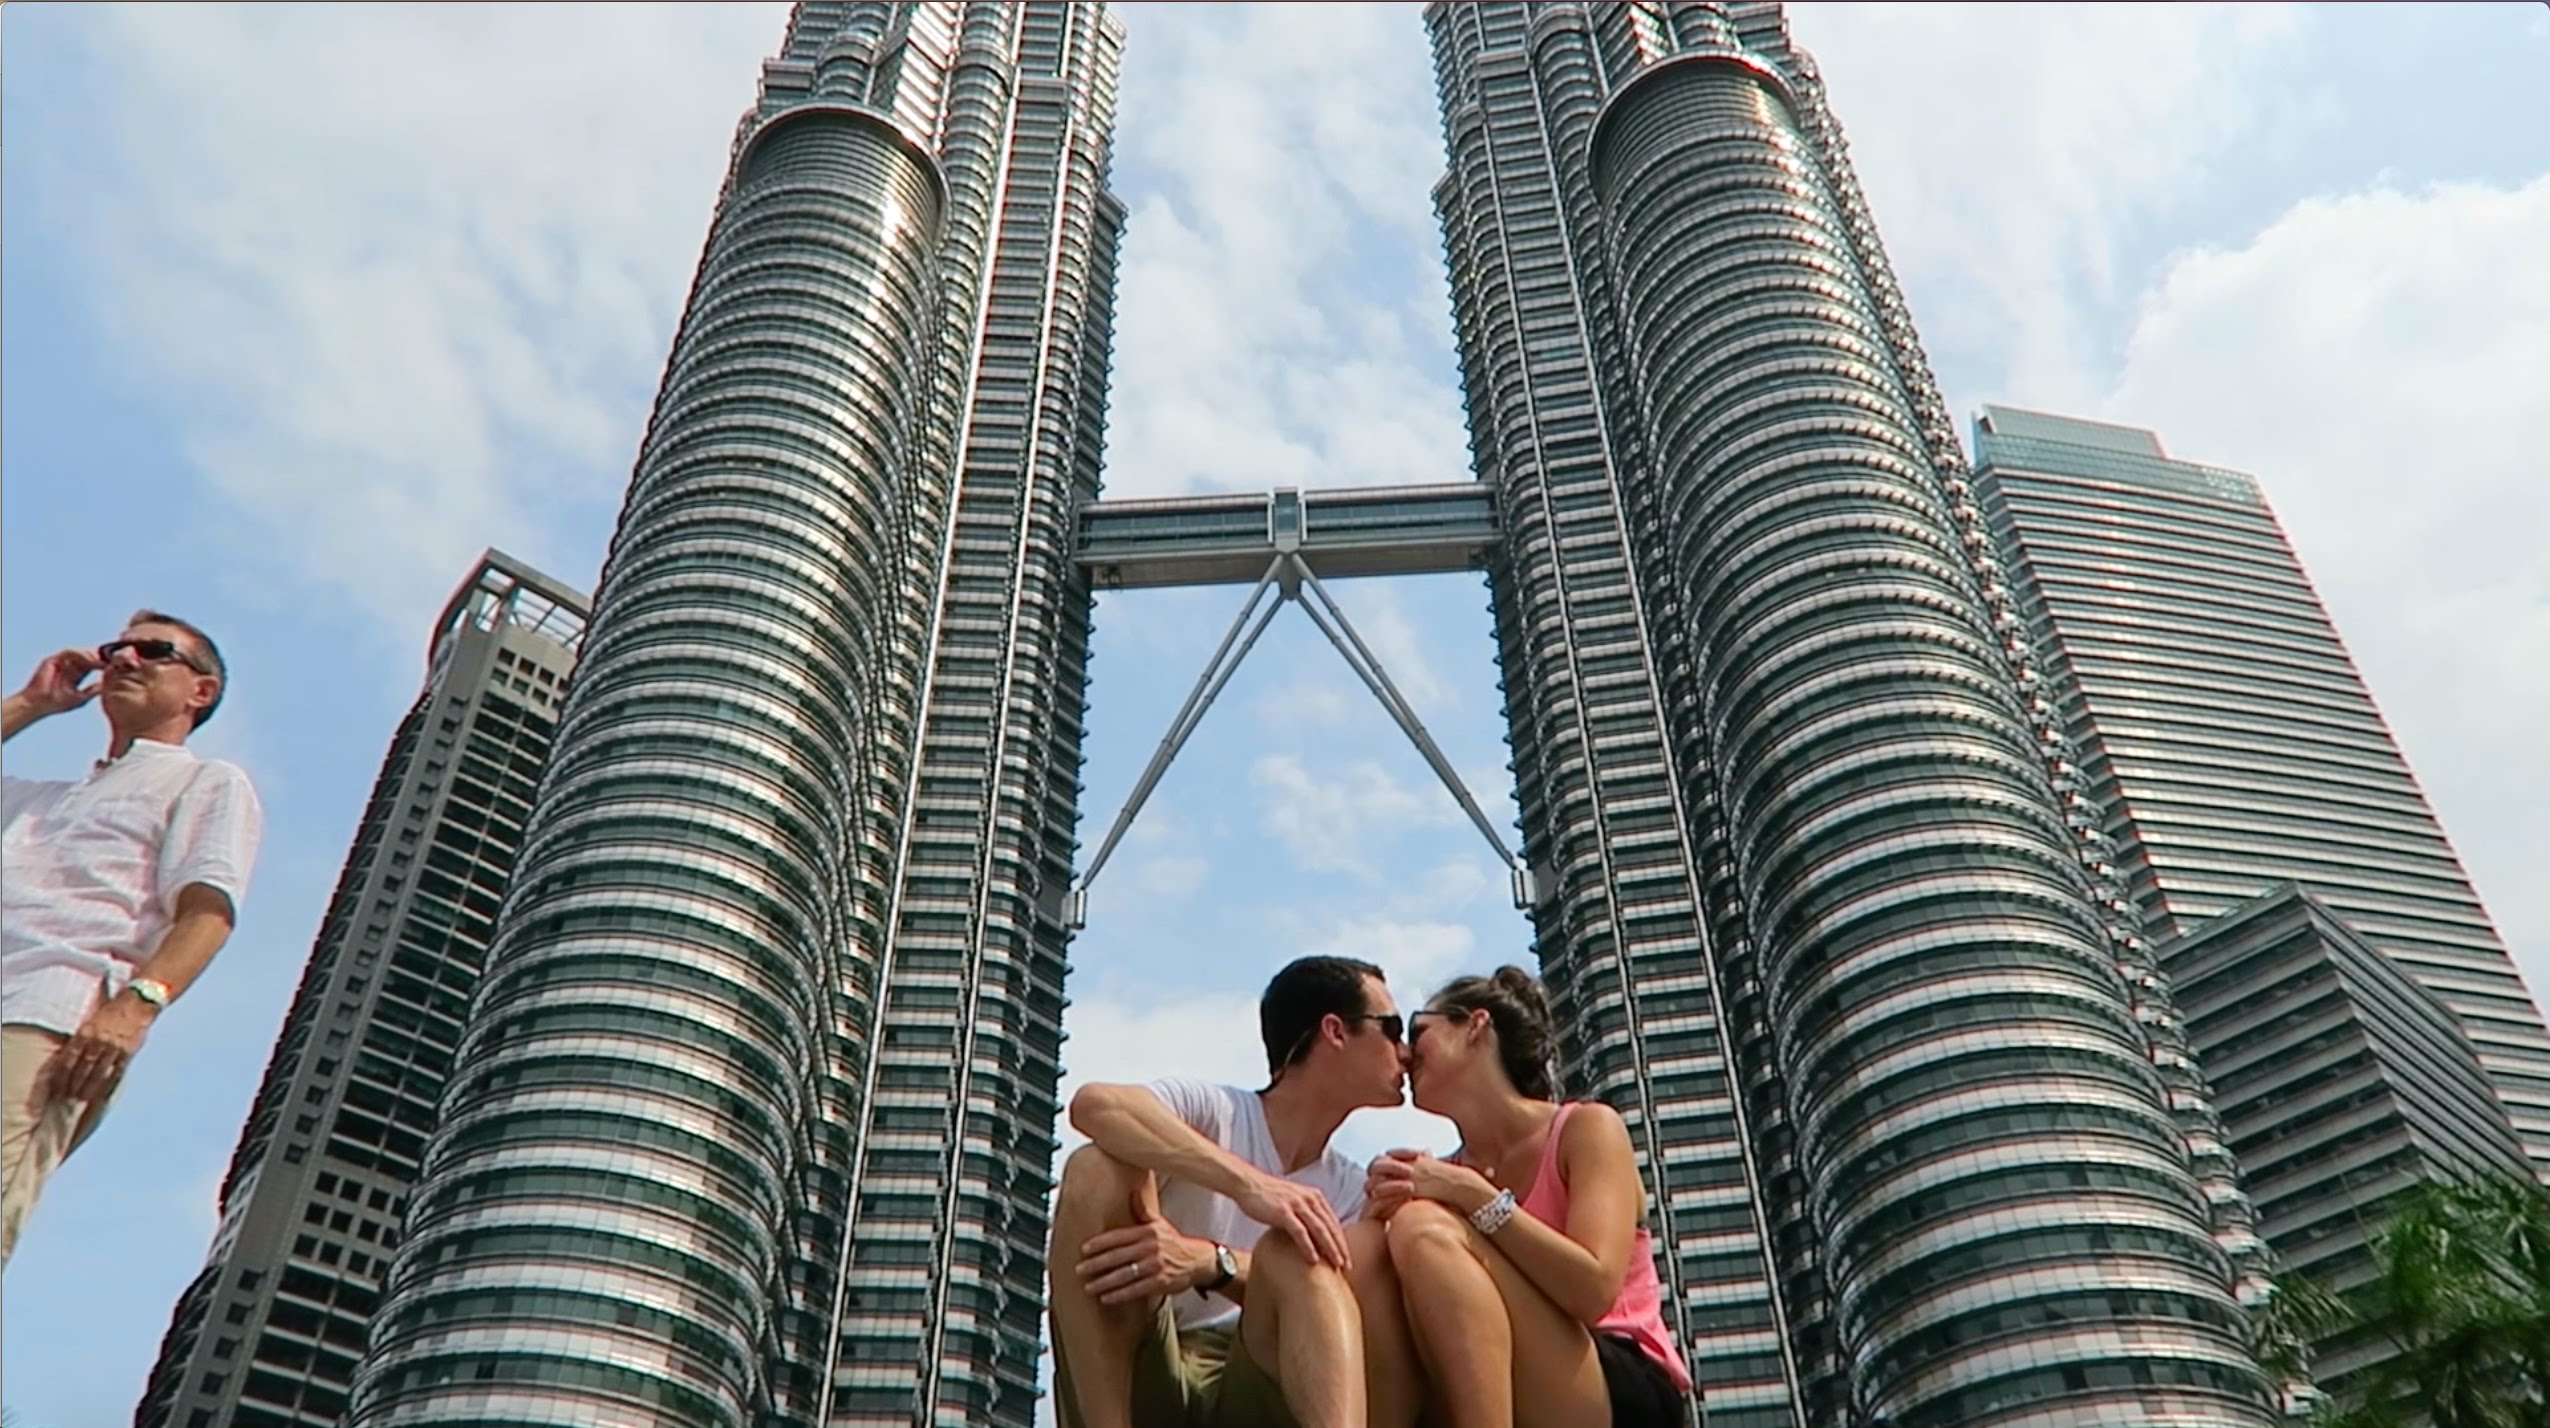 The ICONIC Petronas Towers | Kuala Lumpur - YouTube